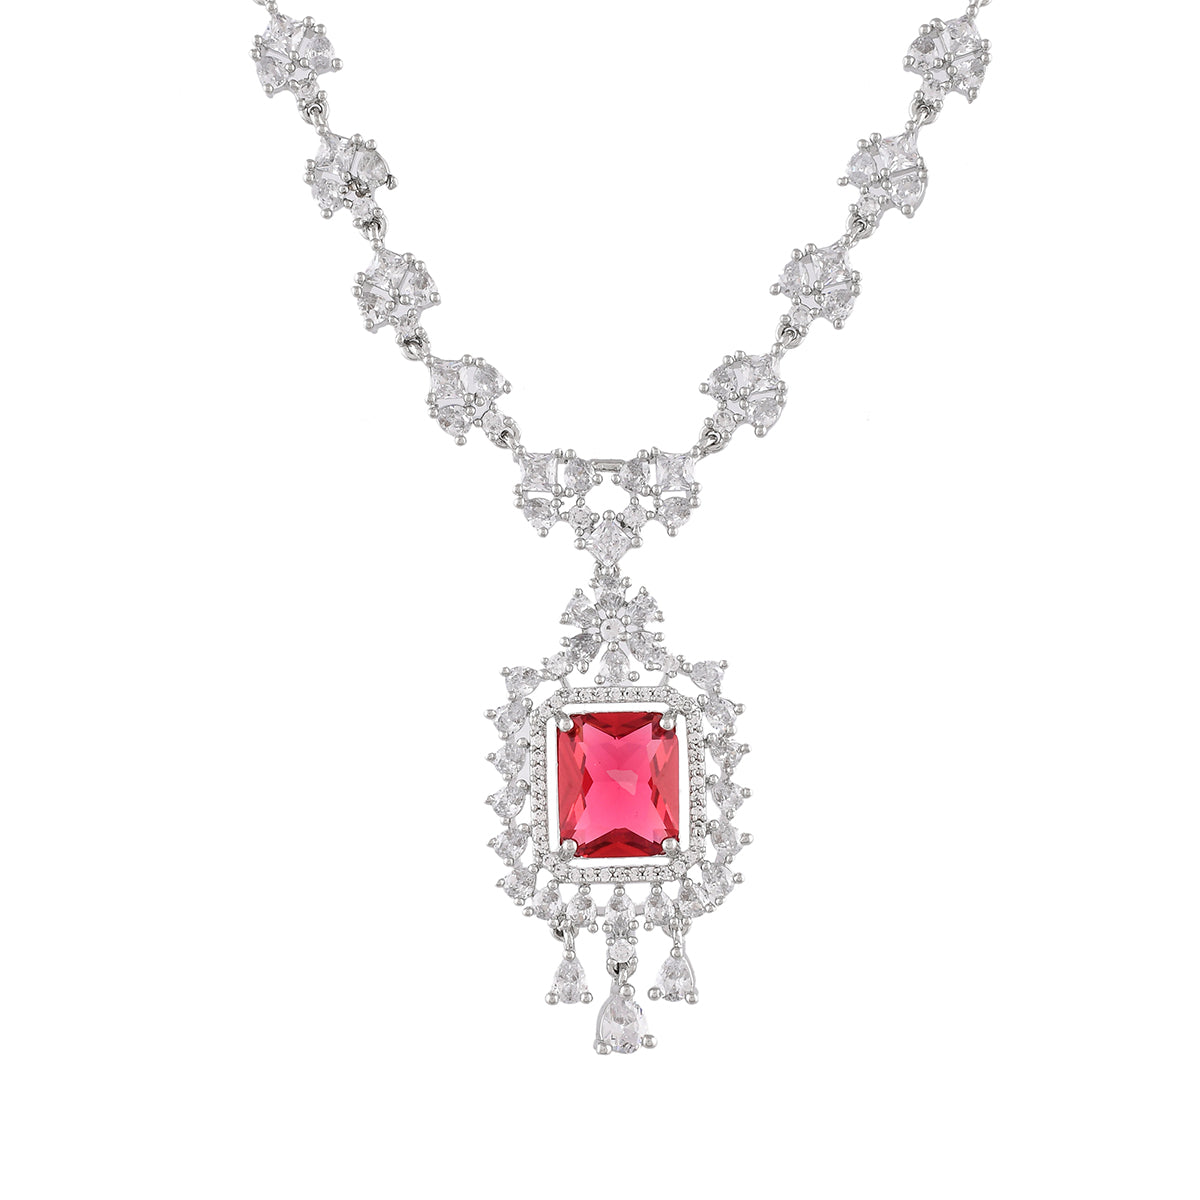 Sparkling Elegance Square Cut Pink CZ Jewellery Set